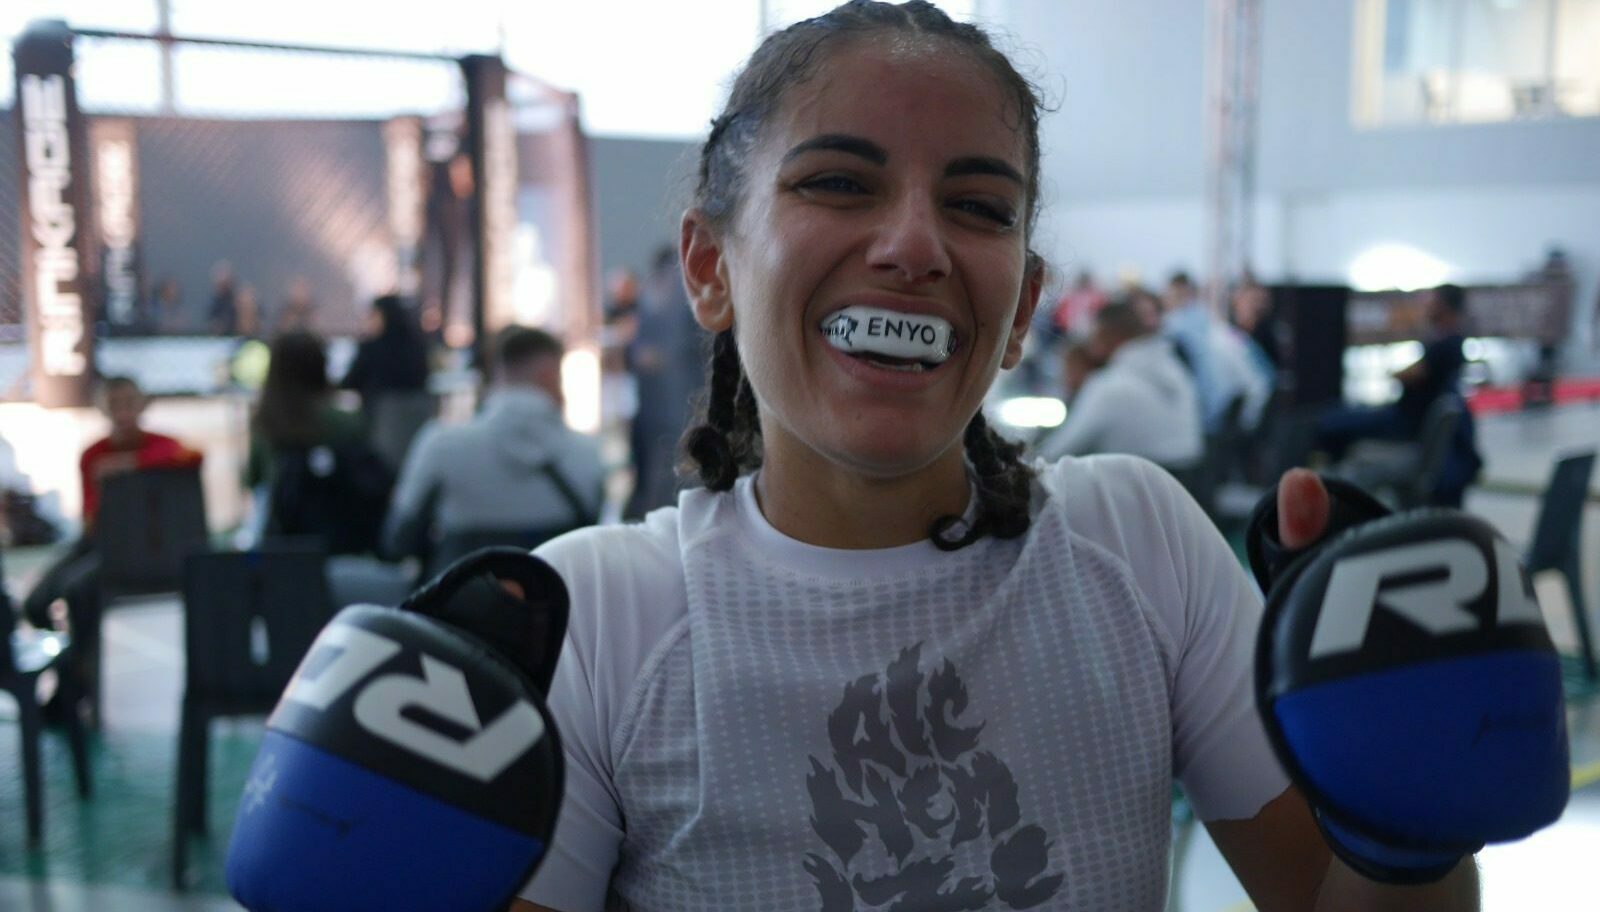 Myriam Benadda, la combattante de MMA qui s’engage